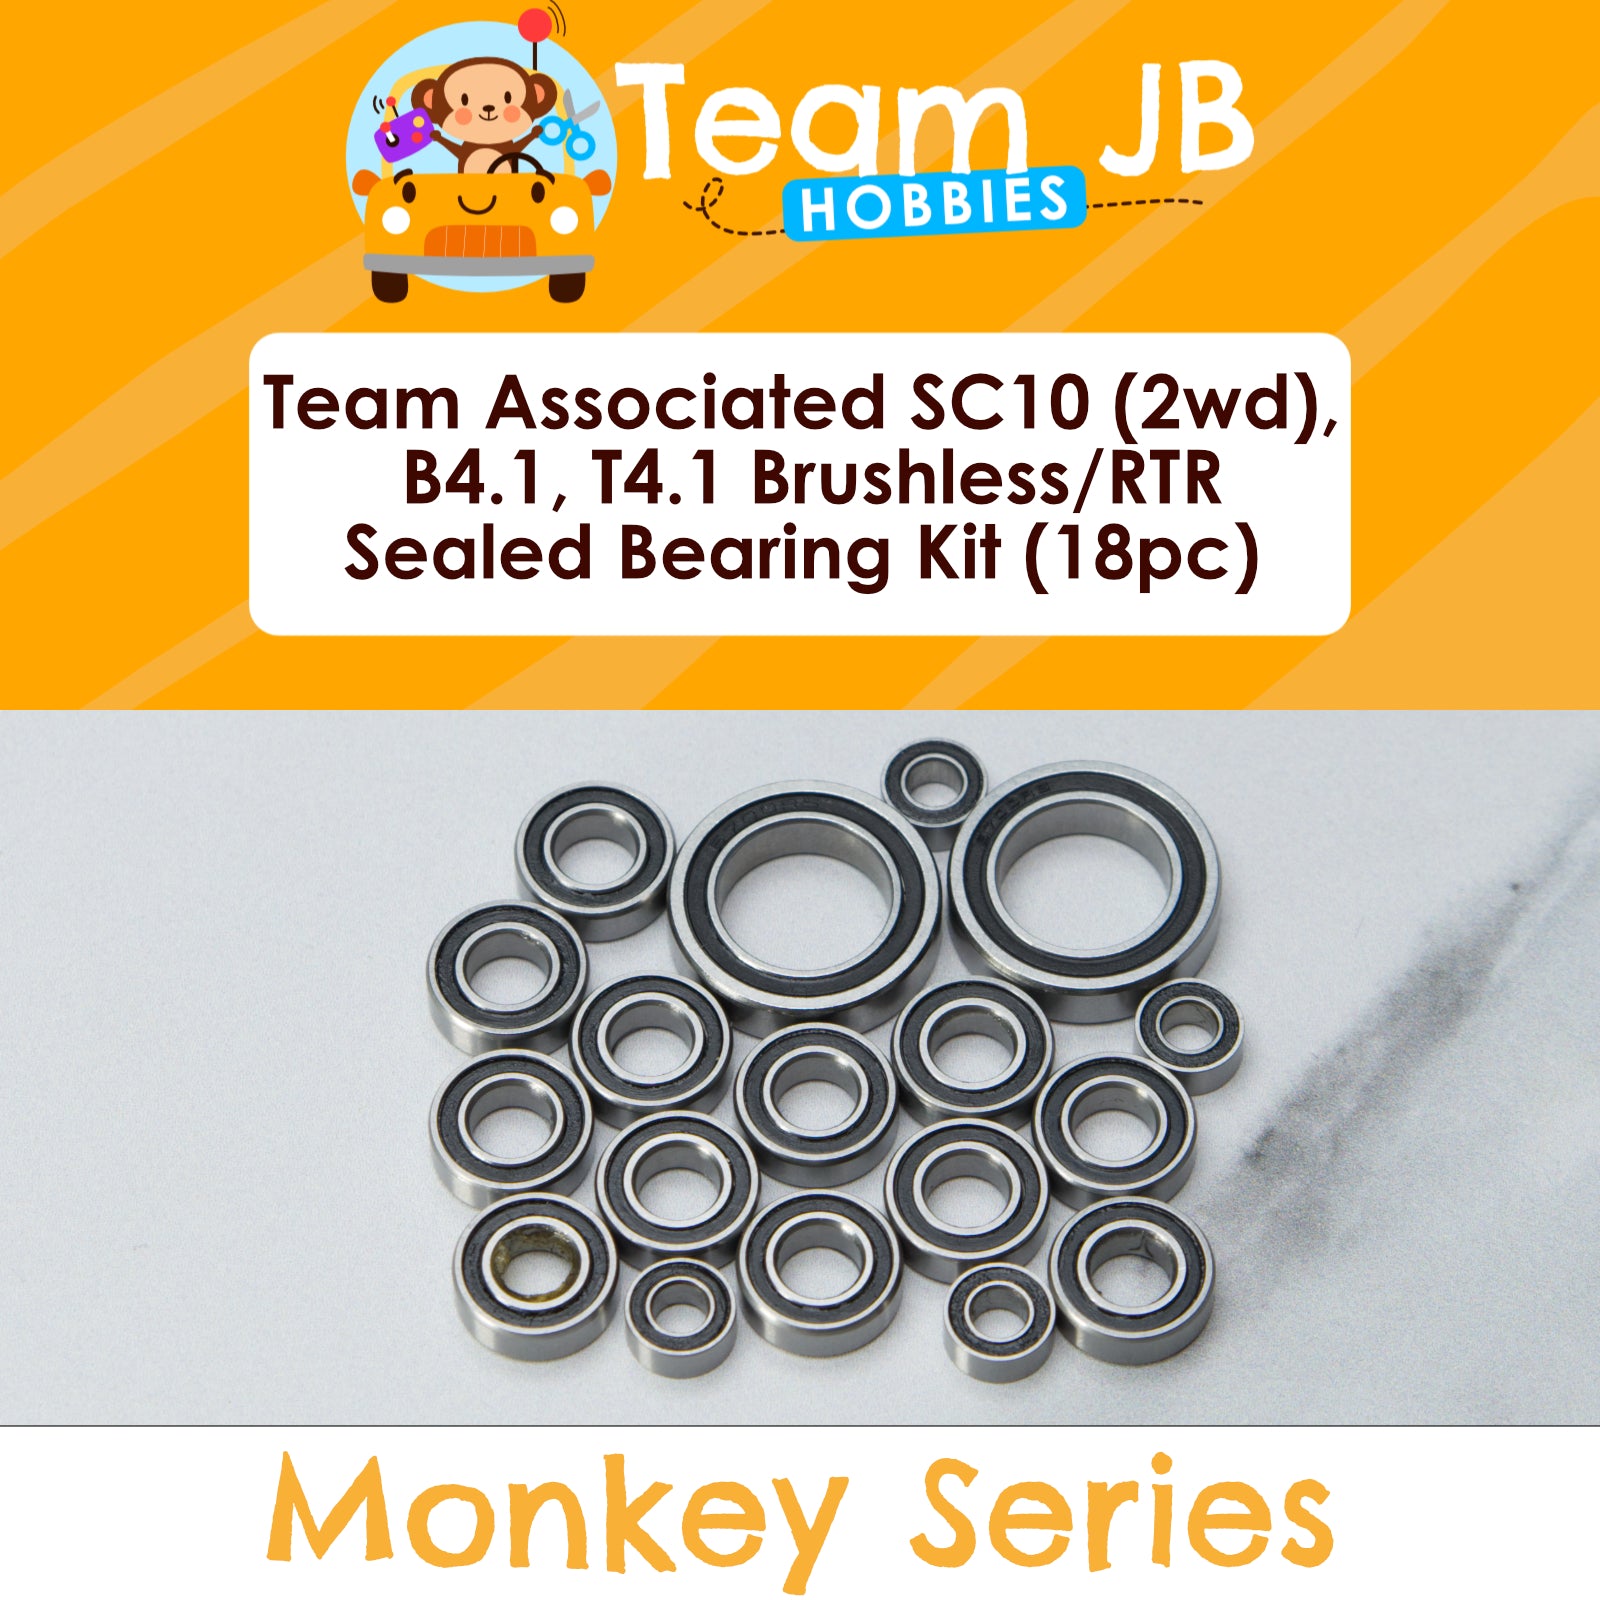 Team Associated SC10 (2wd), B4.1 Brushless RTR, B4.1 RTR, T4.1 Brushless RTR, T4.1 RTR - Sealed Bearing Kit